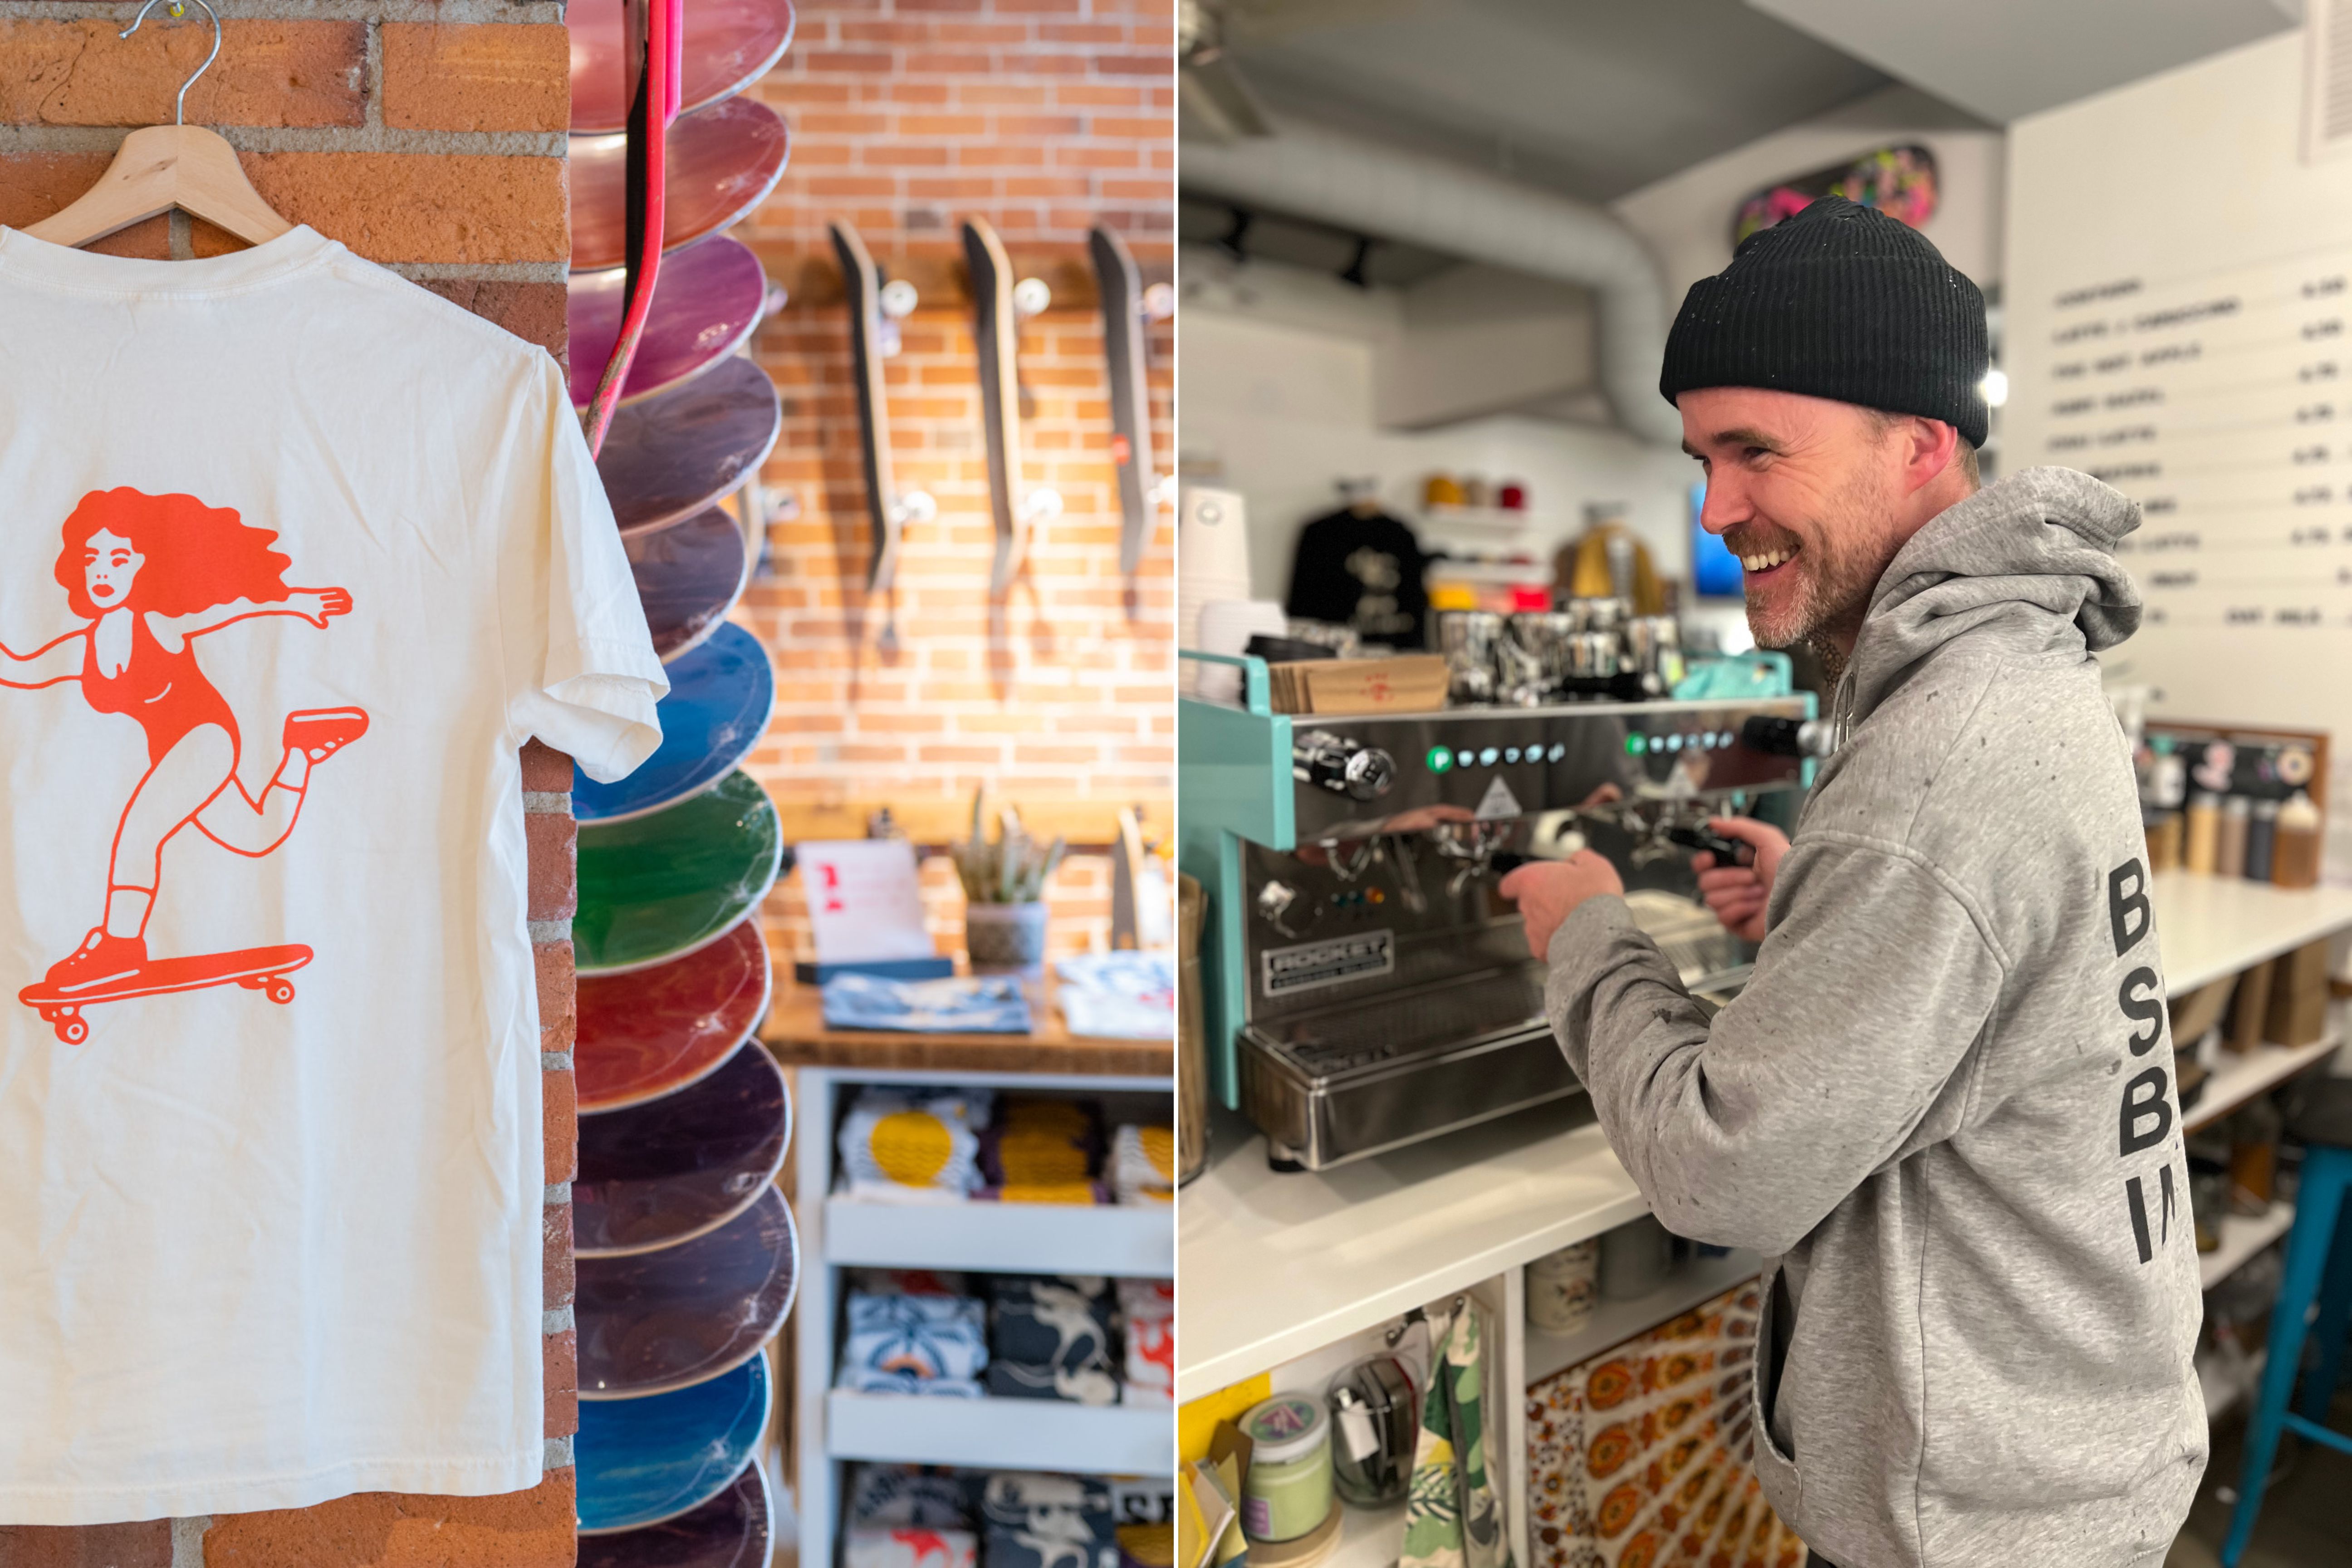 BSE Skateboard Shop t-shirt merchandise on left side and owner Jay Bridges on right side smiling.